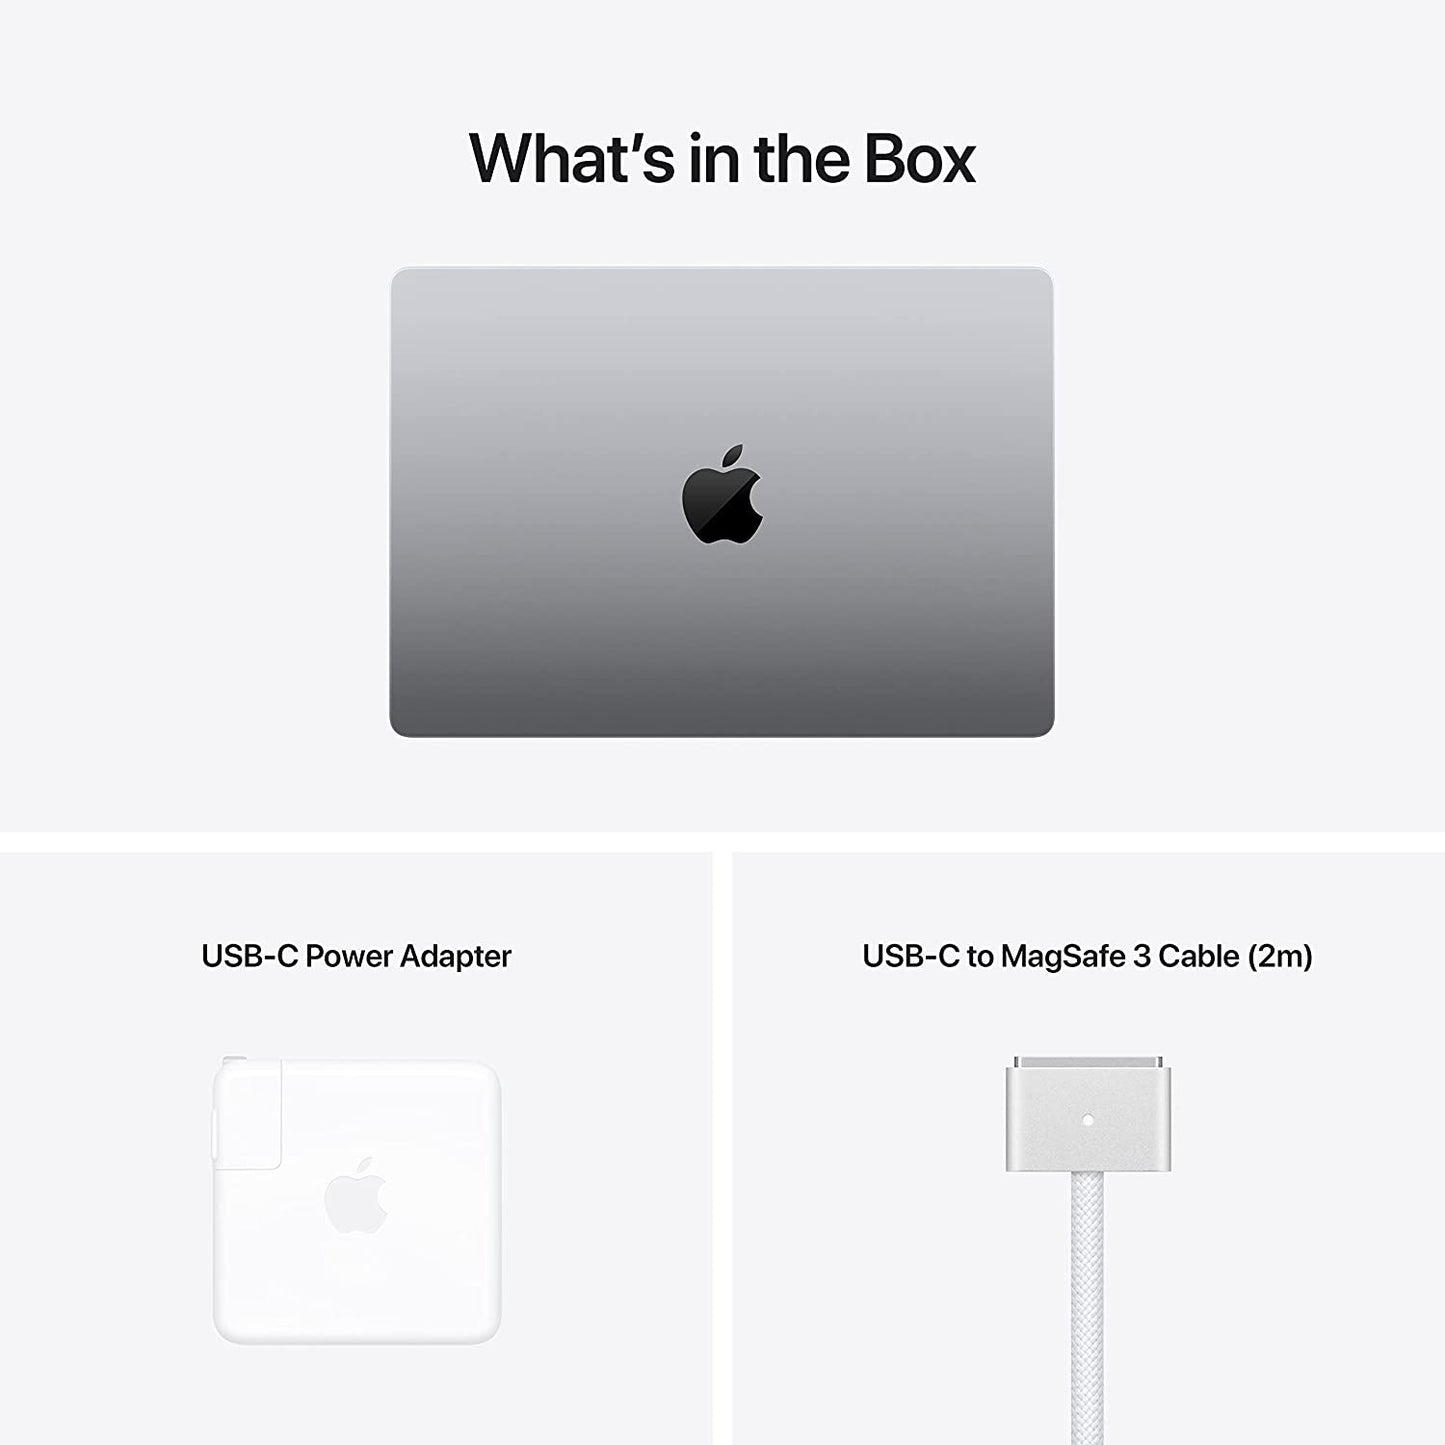 Apple MacBook A1989, 2019, Ci5, 8GB, 512SSD, Space Grey